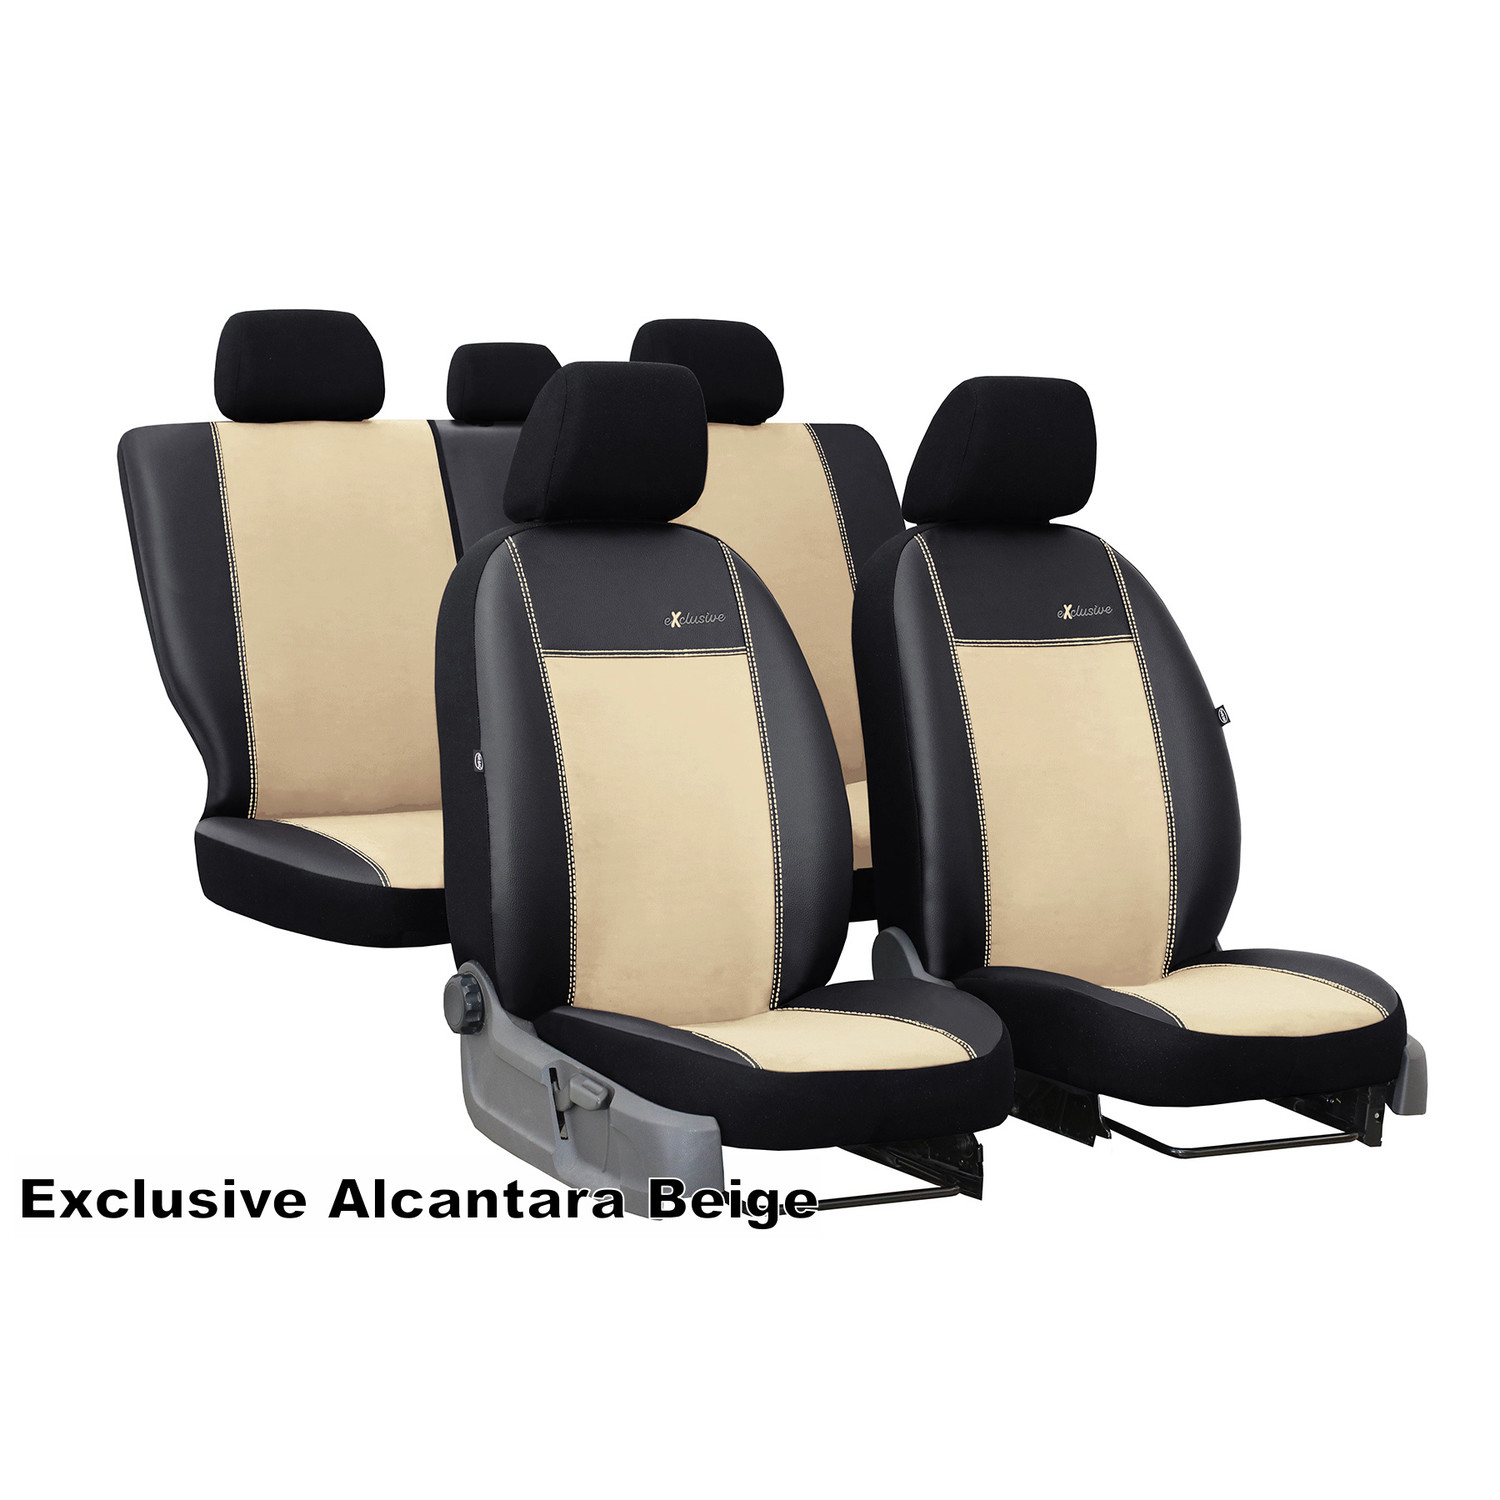 Sitzbezüge passend für Audi A3 (Model: Pilot - Farbe: Grau)